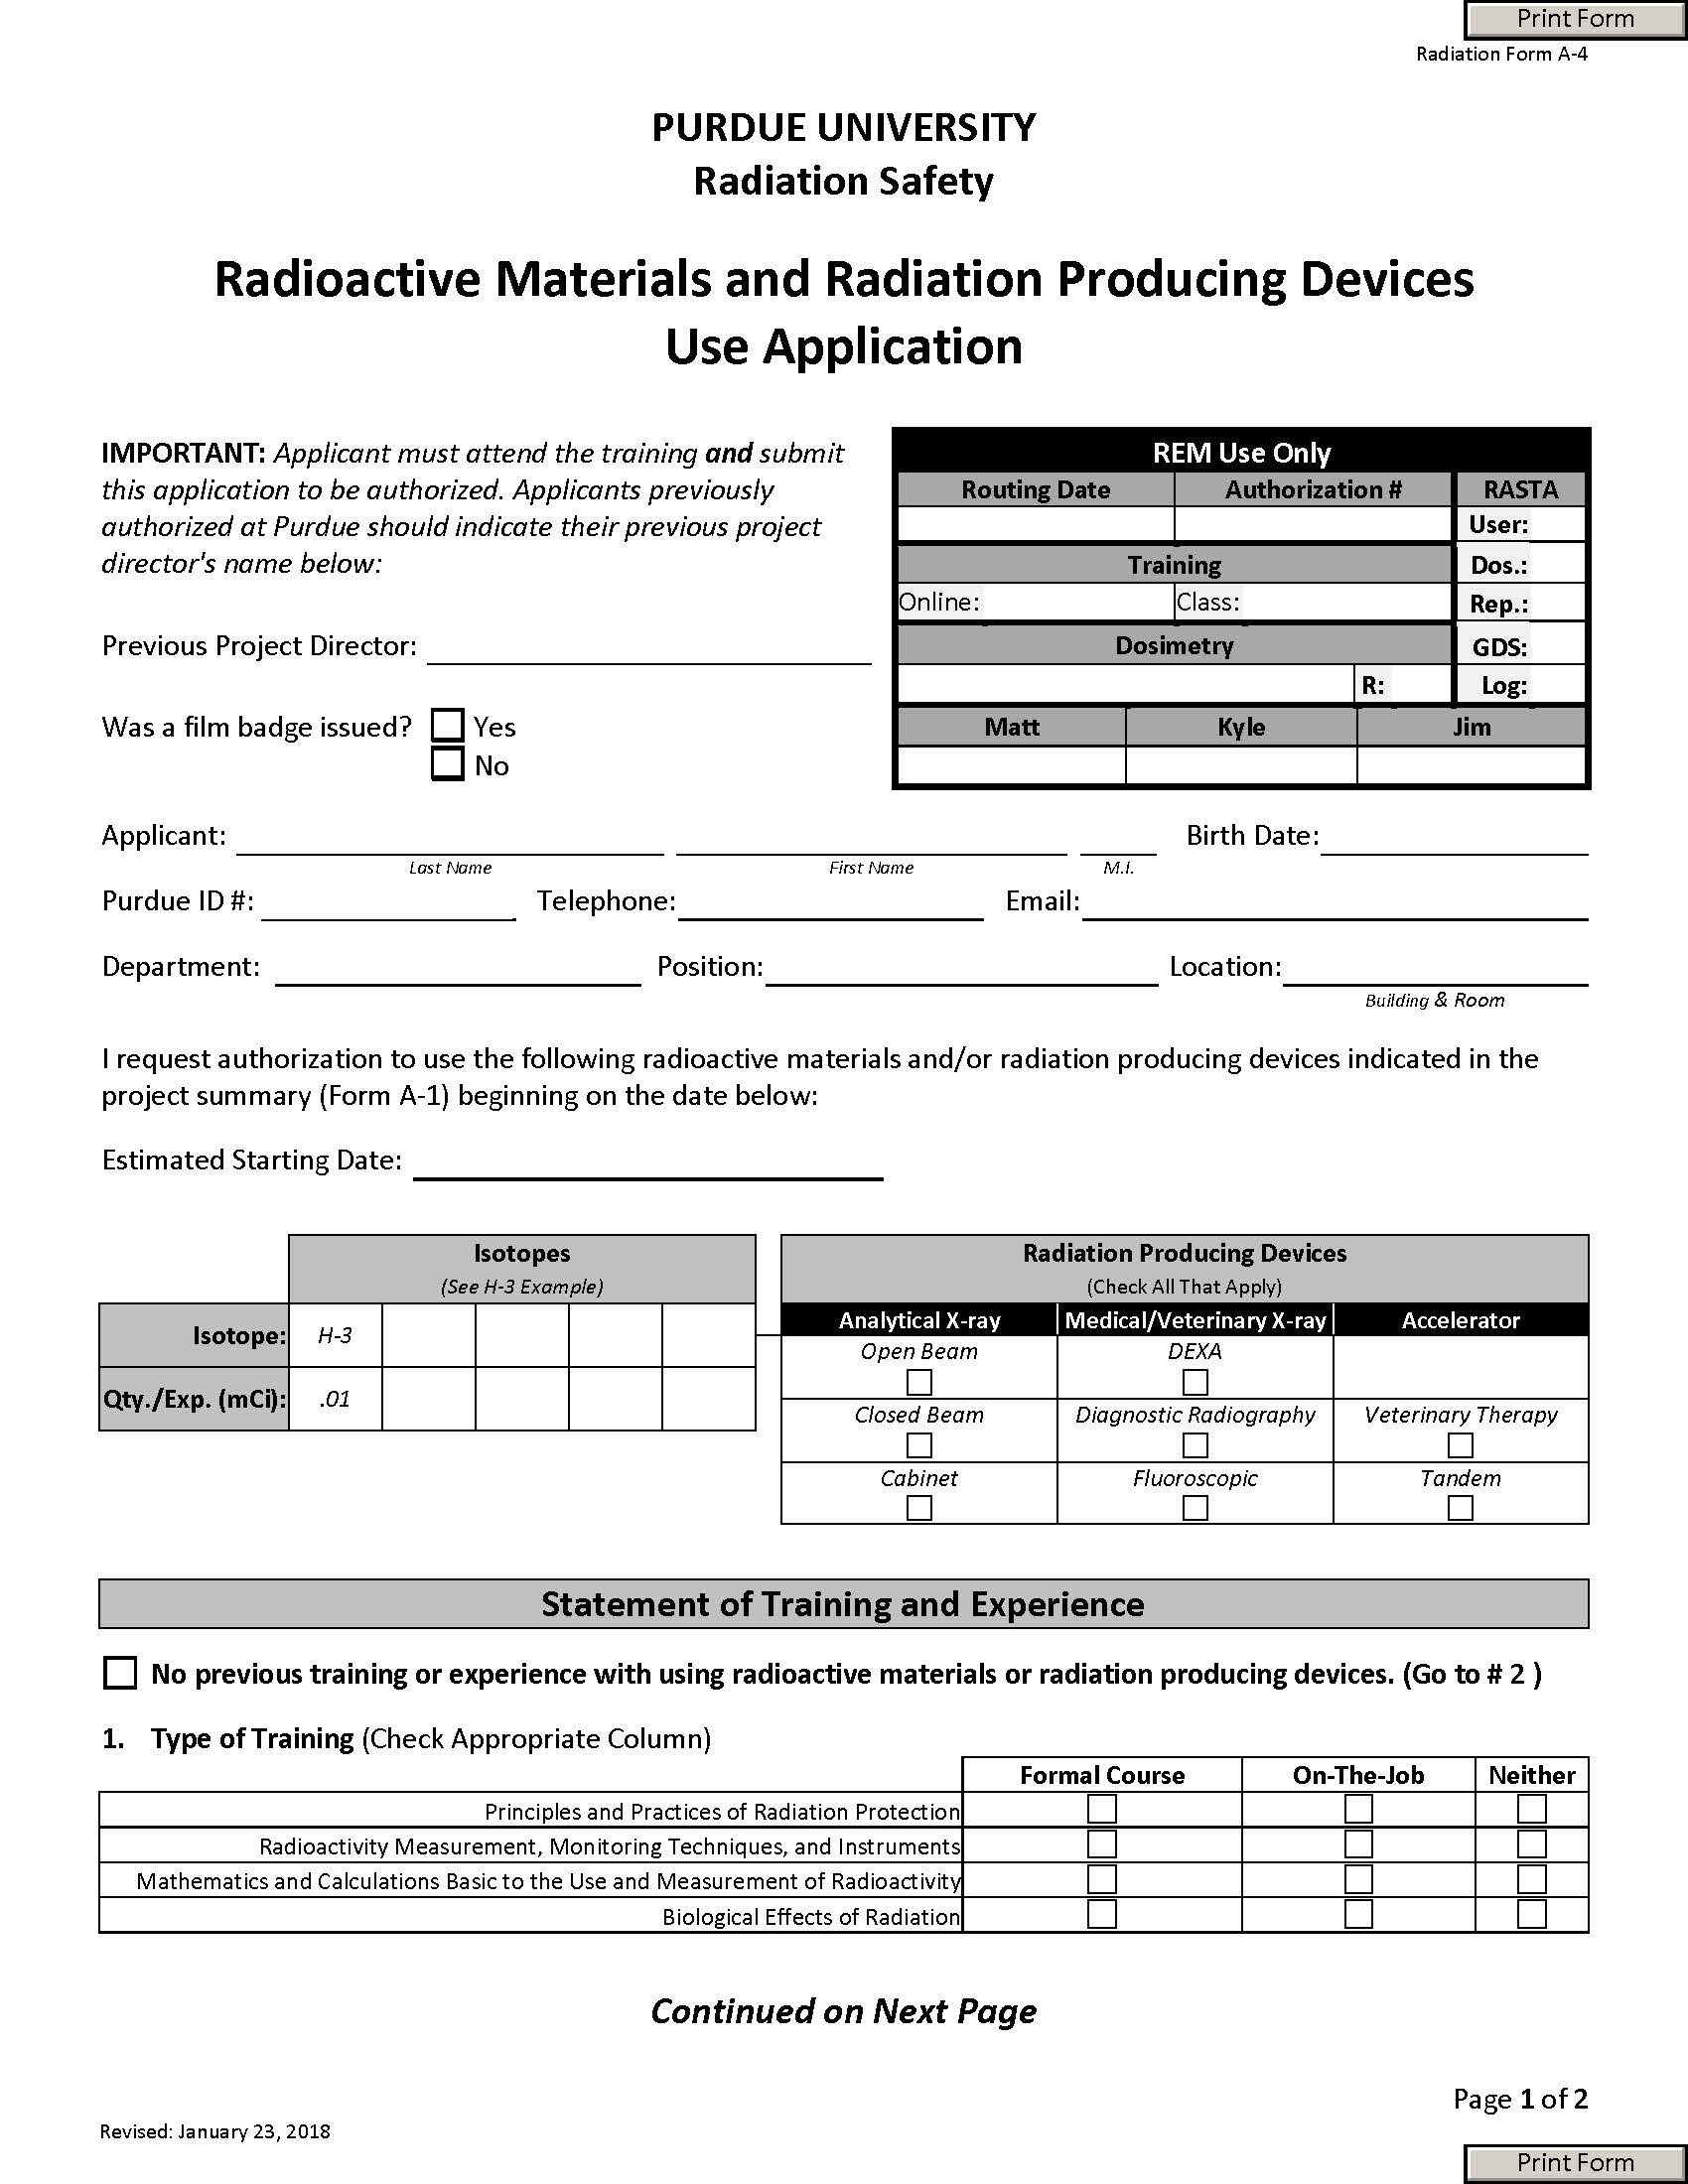 Radioactive Materials and Radiation Producing Use Application